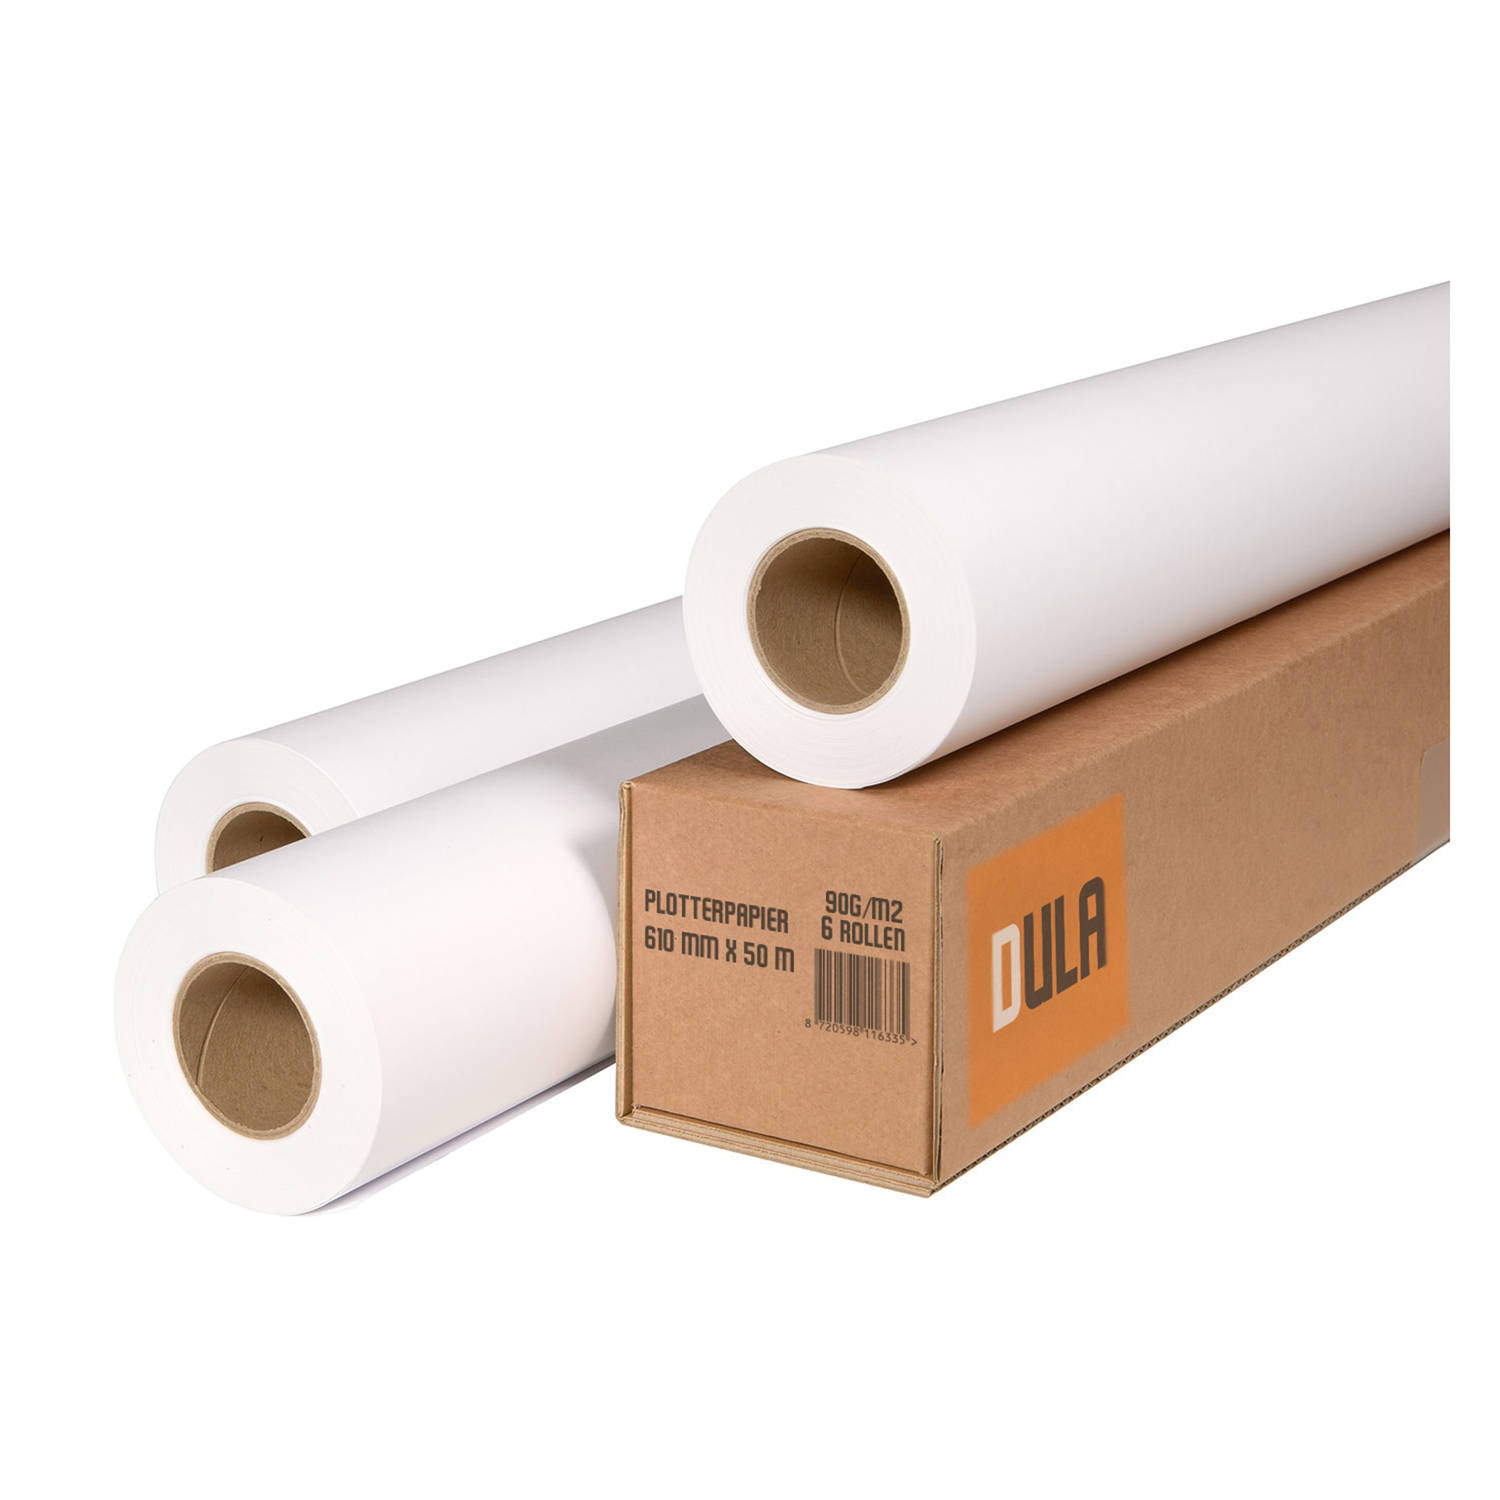 DULA Plotterpapier inkjetpapier 610mm x 50m 90 gram 6 rollen A1 oversize papier 24 inch